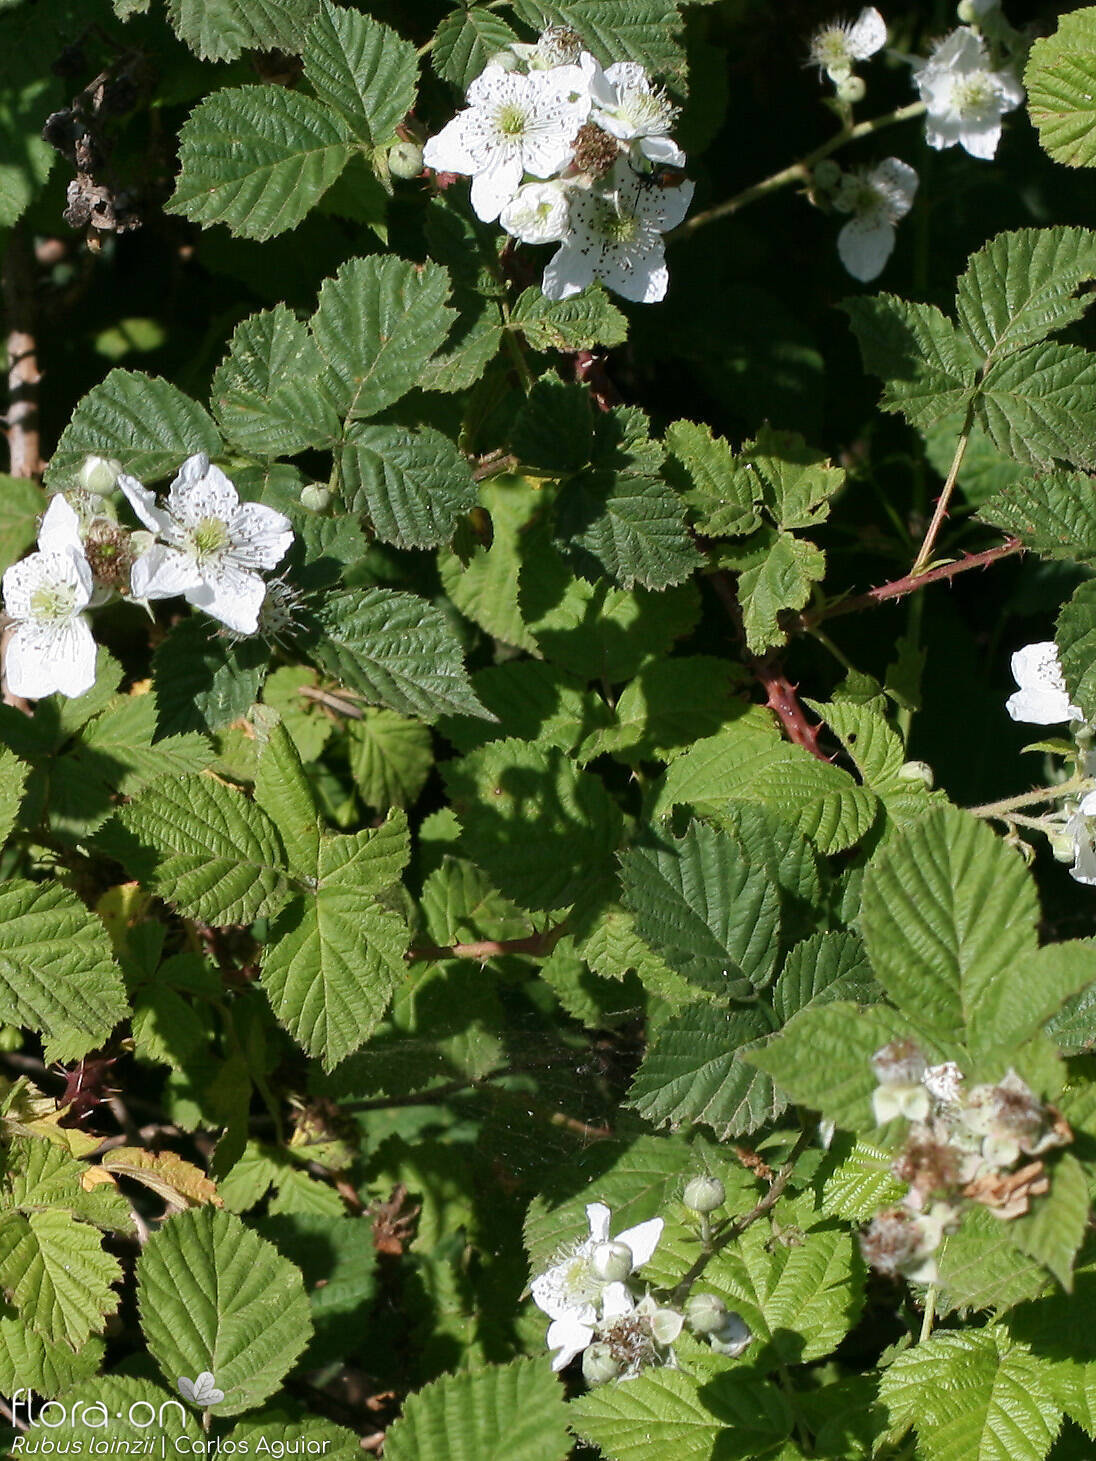 Rubus lainzii - Hábito | Carlos Aguiar; CC BY-NC 4.0